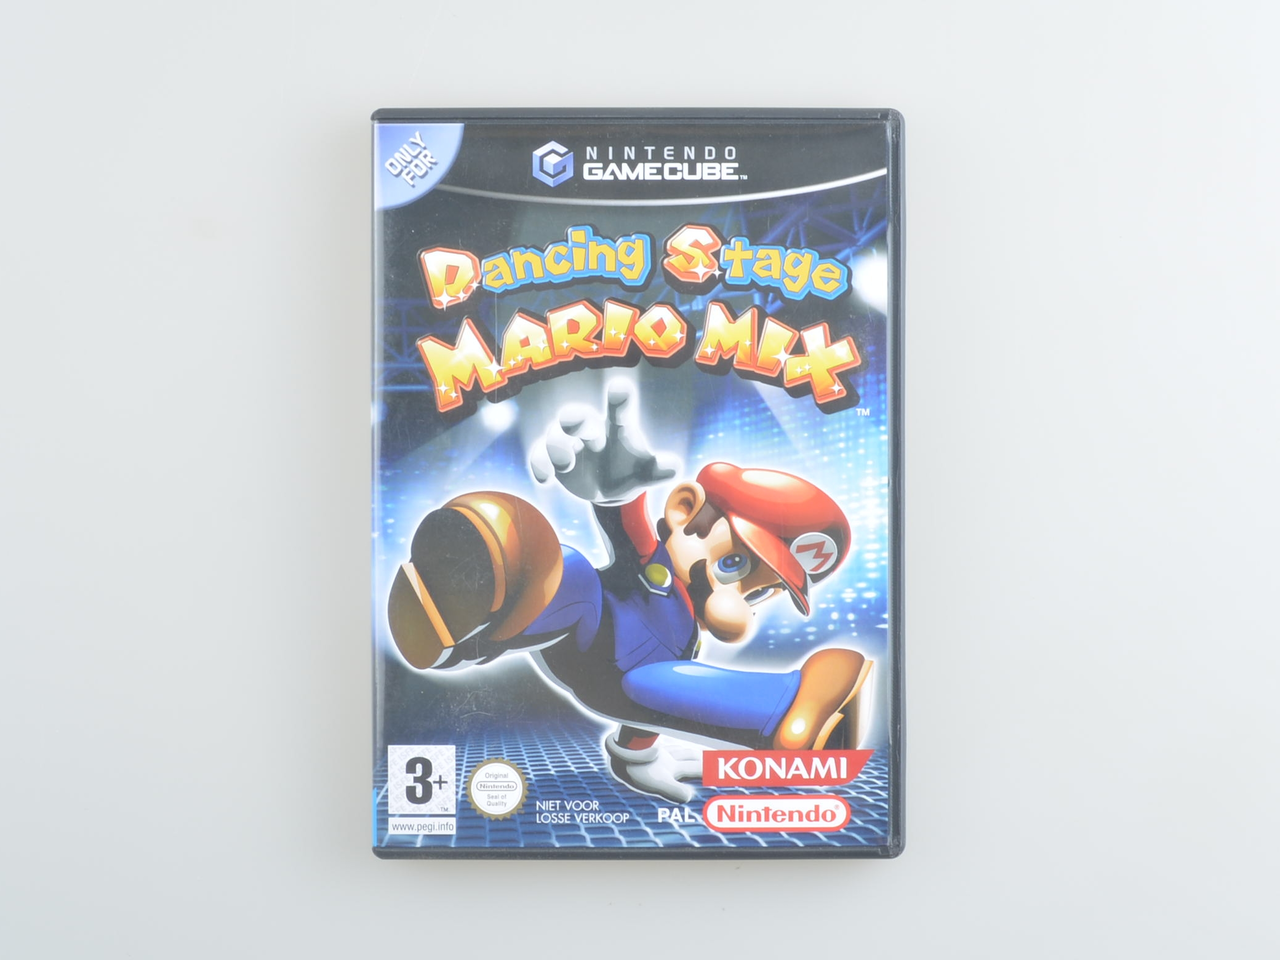 Dancing Stage Mario Mix - Gamecube Games